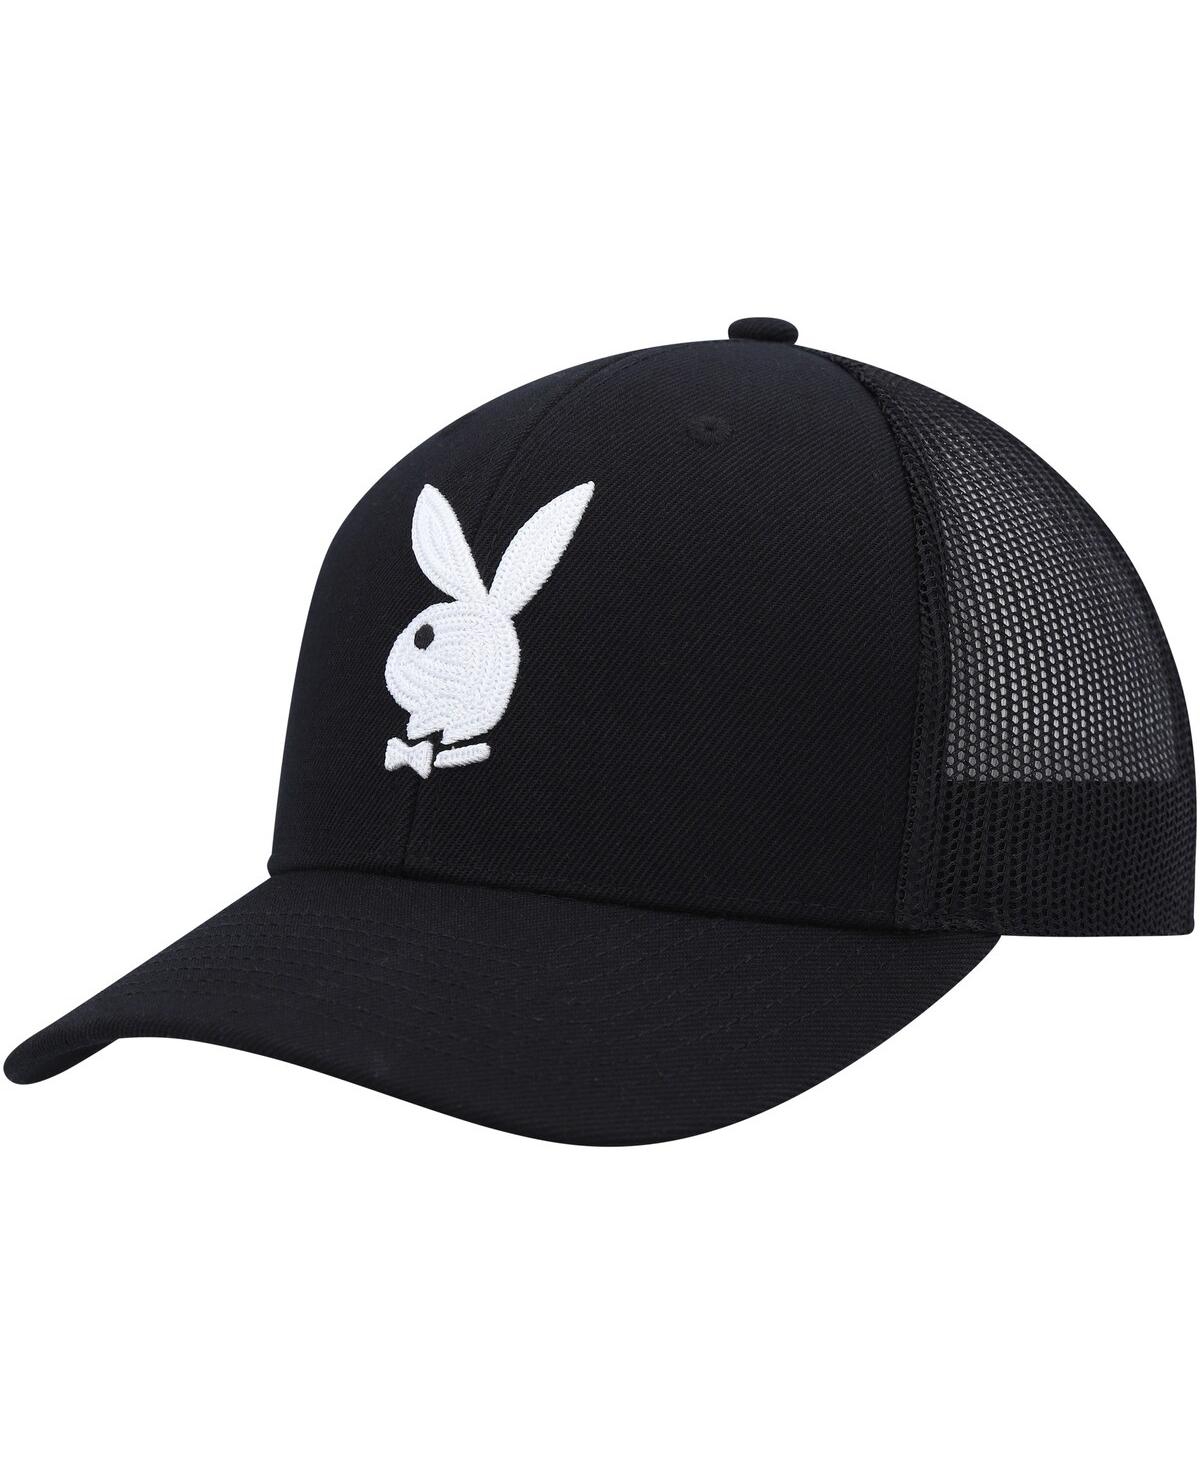 Playboy Men's  Black Trucker Snapback Hat